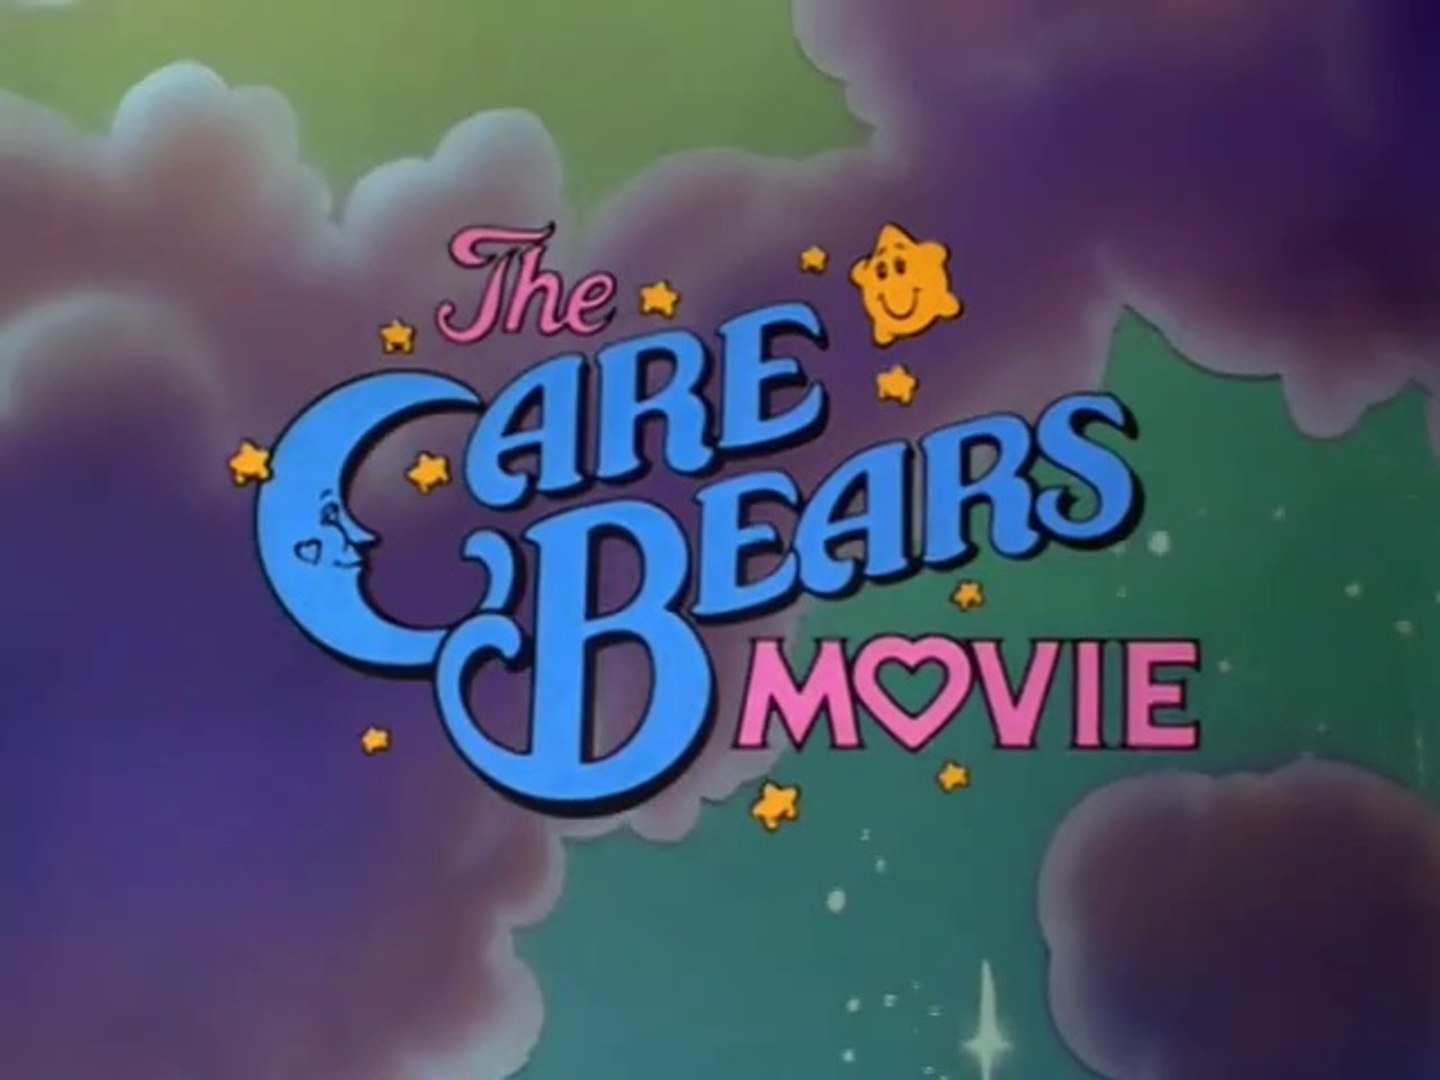 The Care Bears Movie [DVD] [Import] khxv5rg